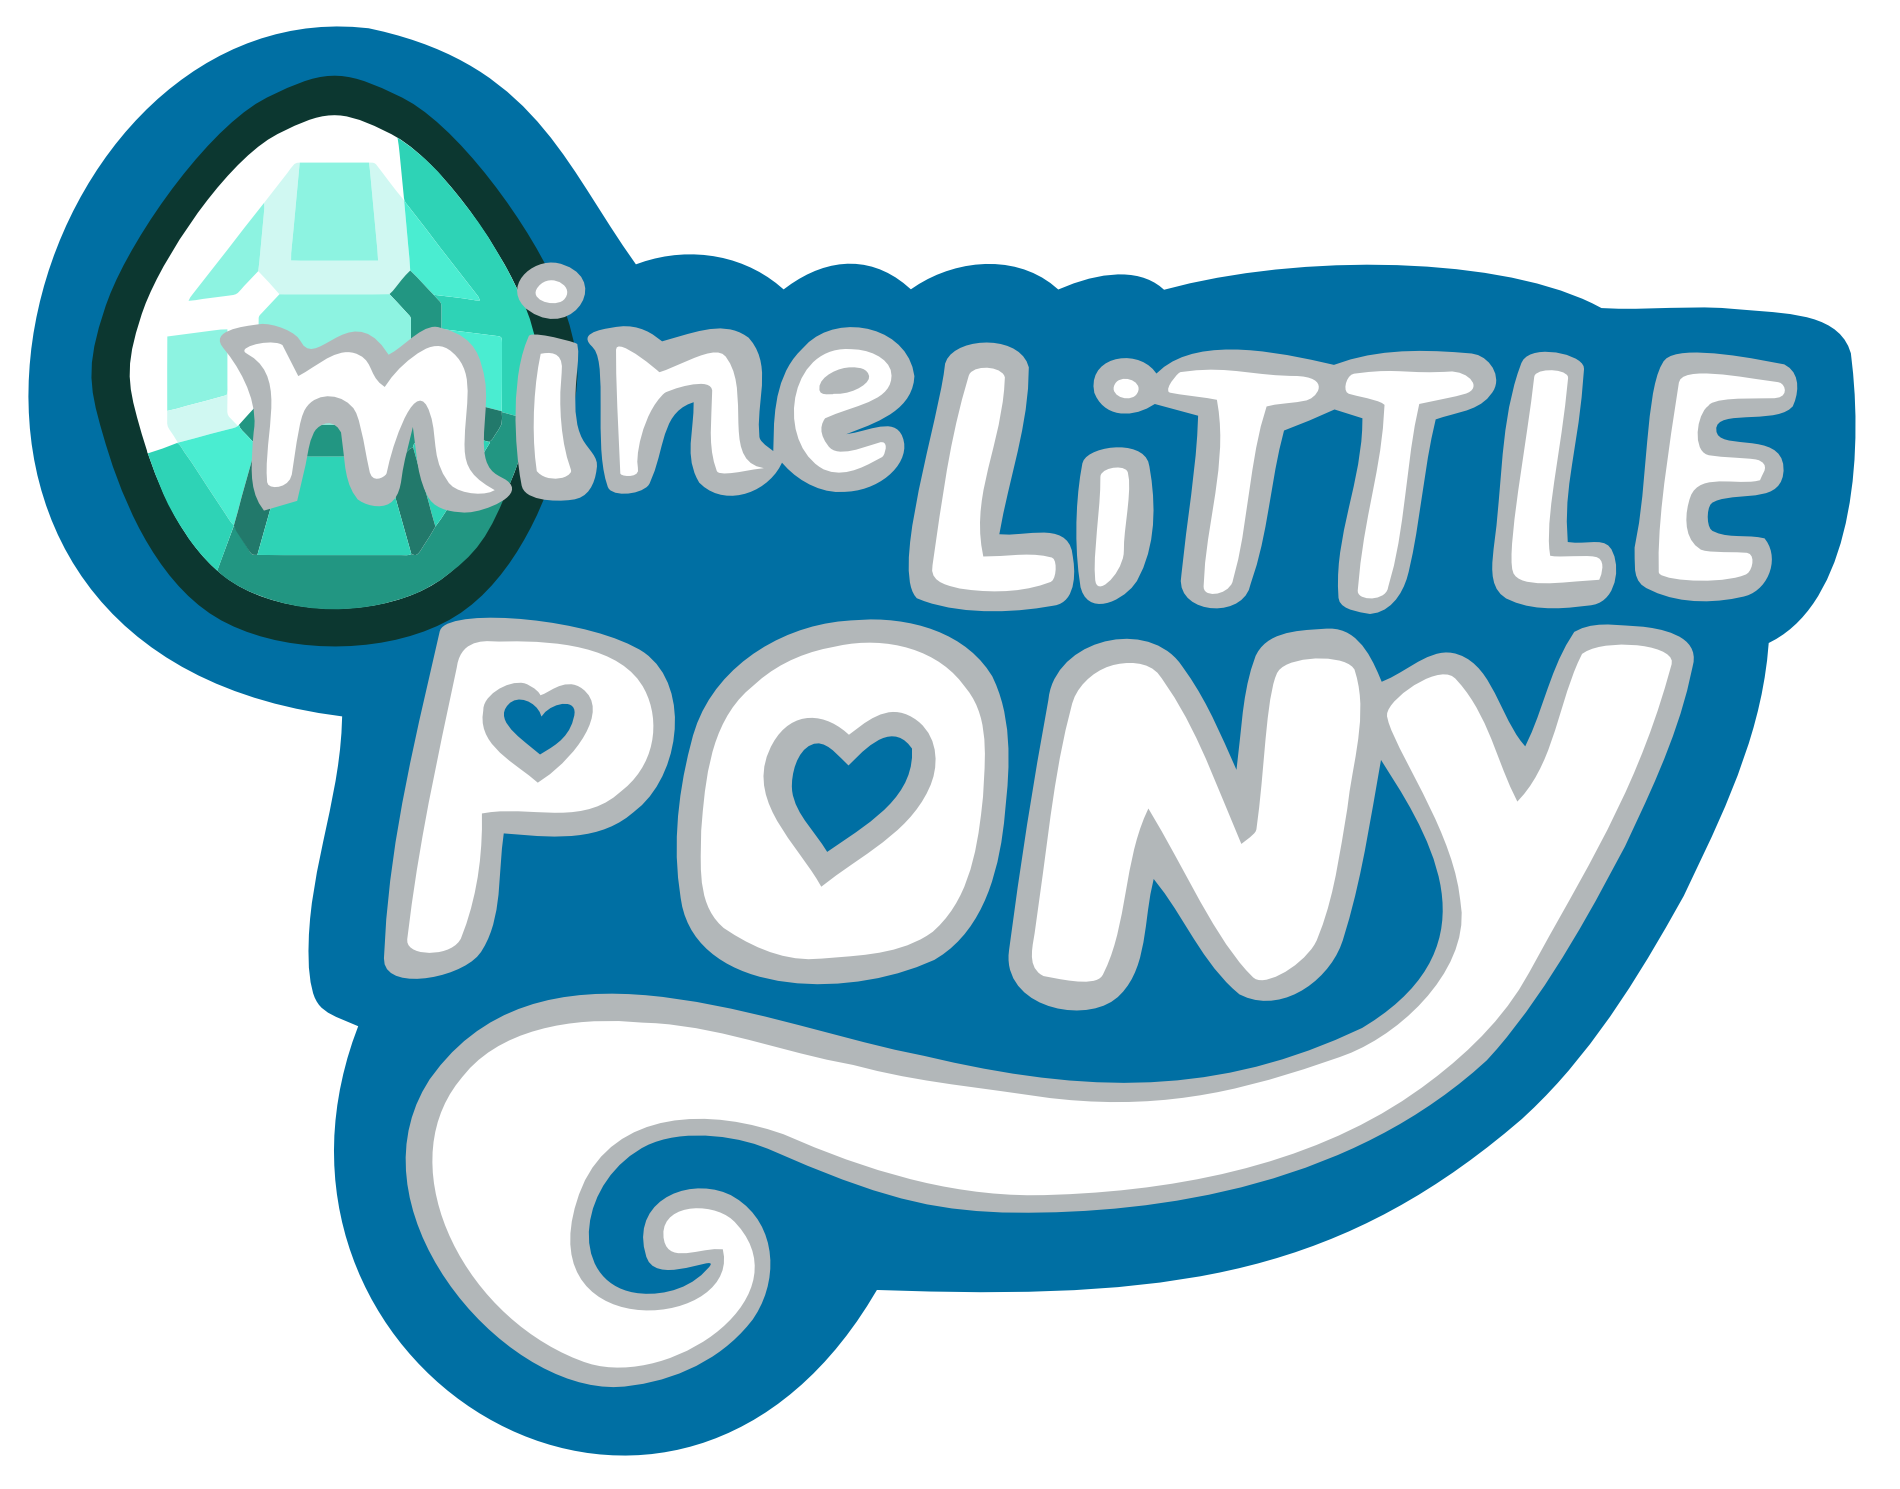 Mine Little Pony logo